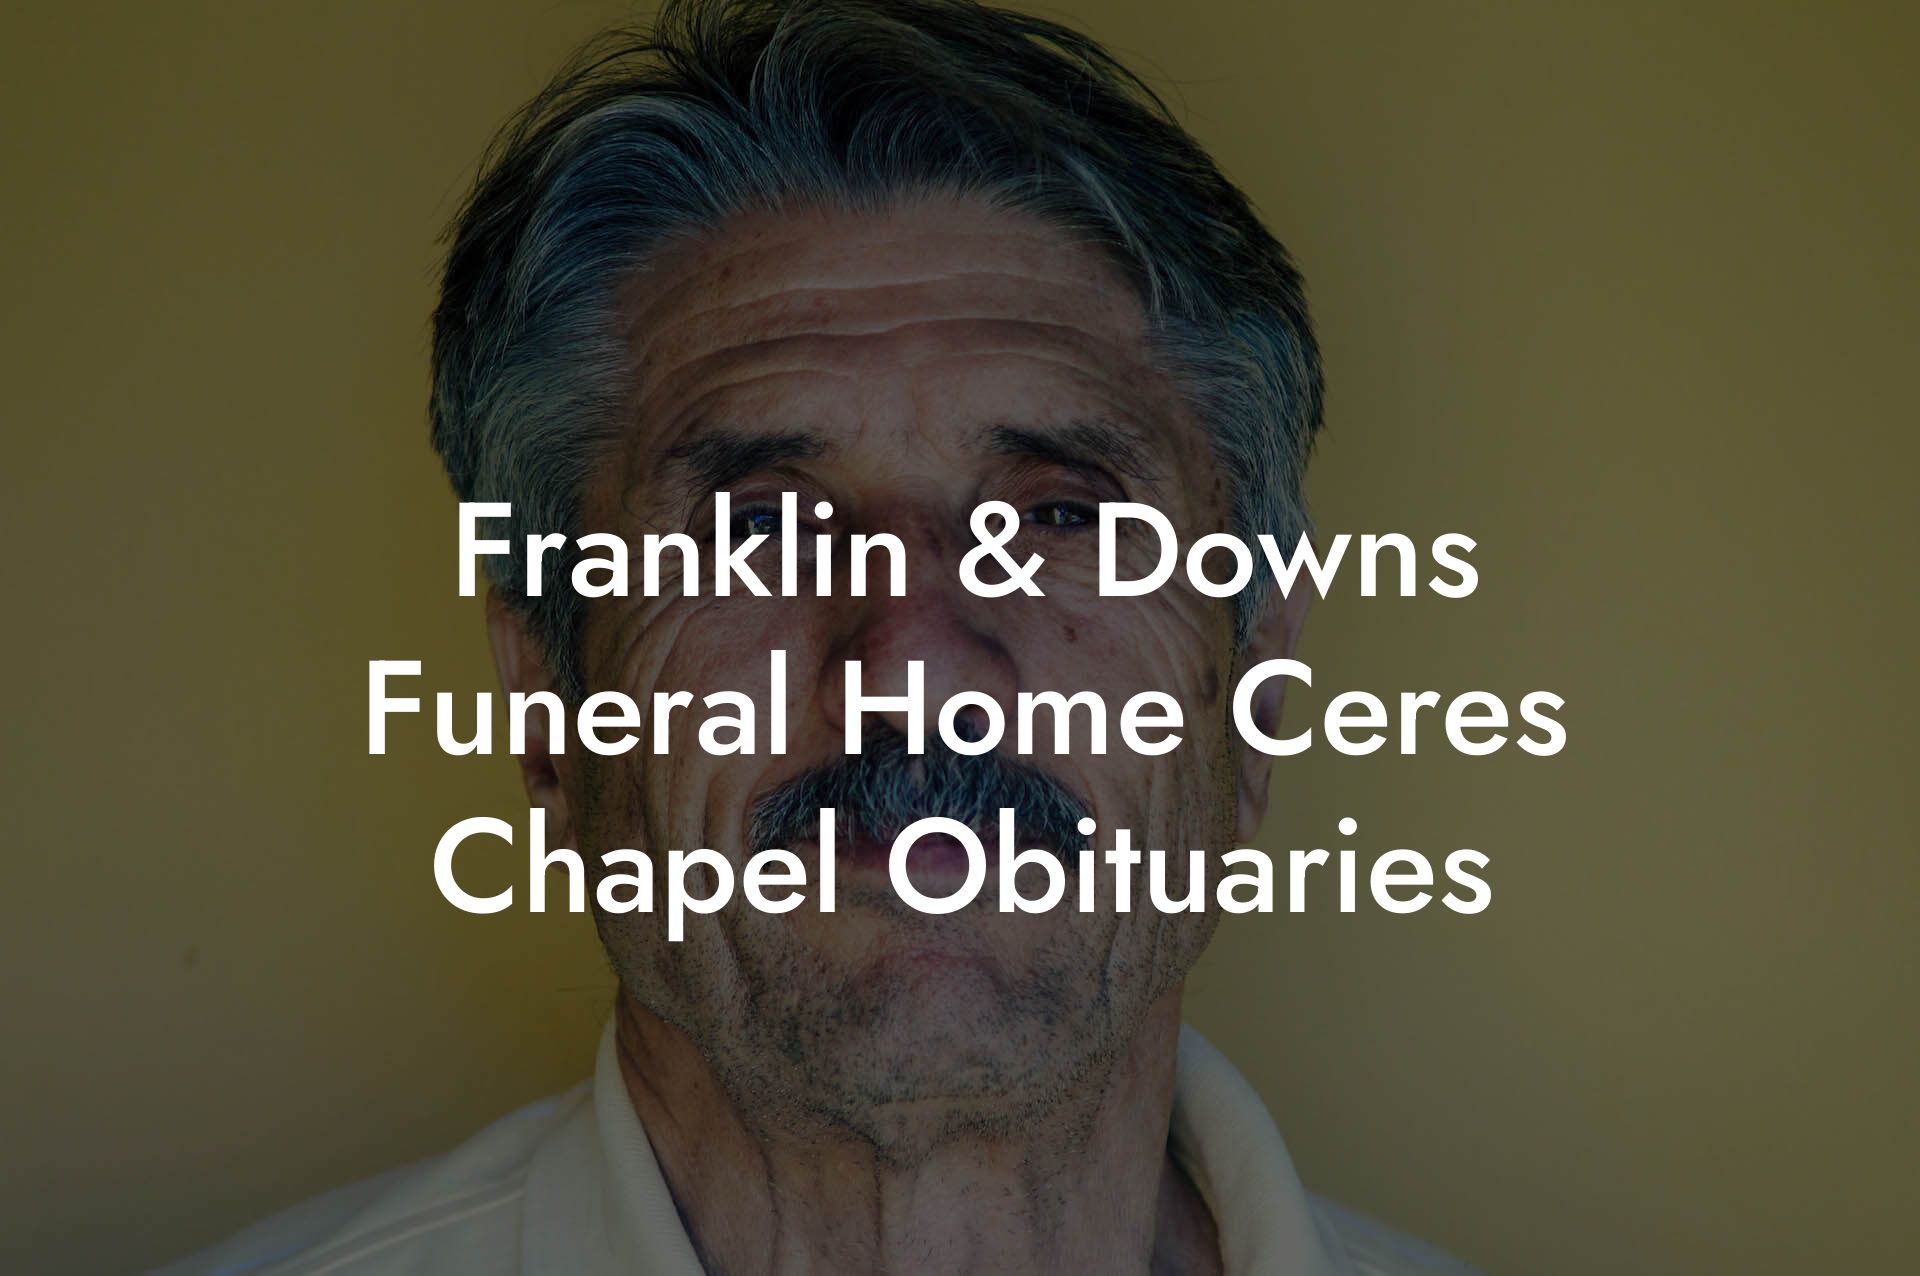 Franklin & Downs Funeral Home Ceres Chapel Obituaries